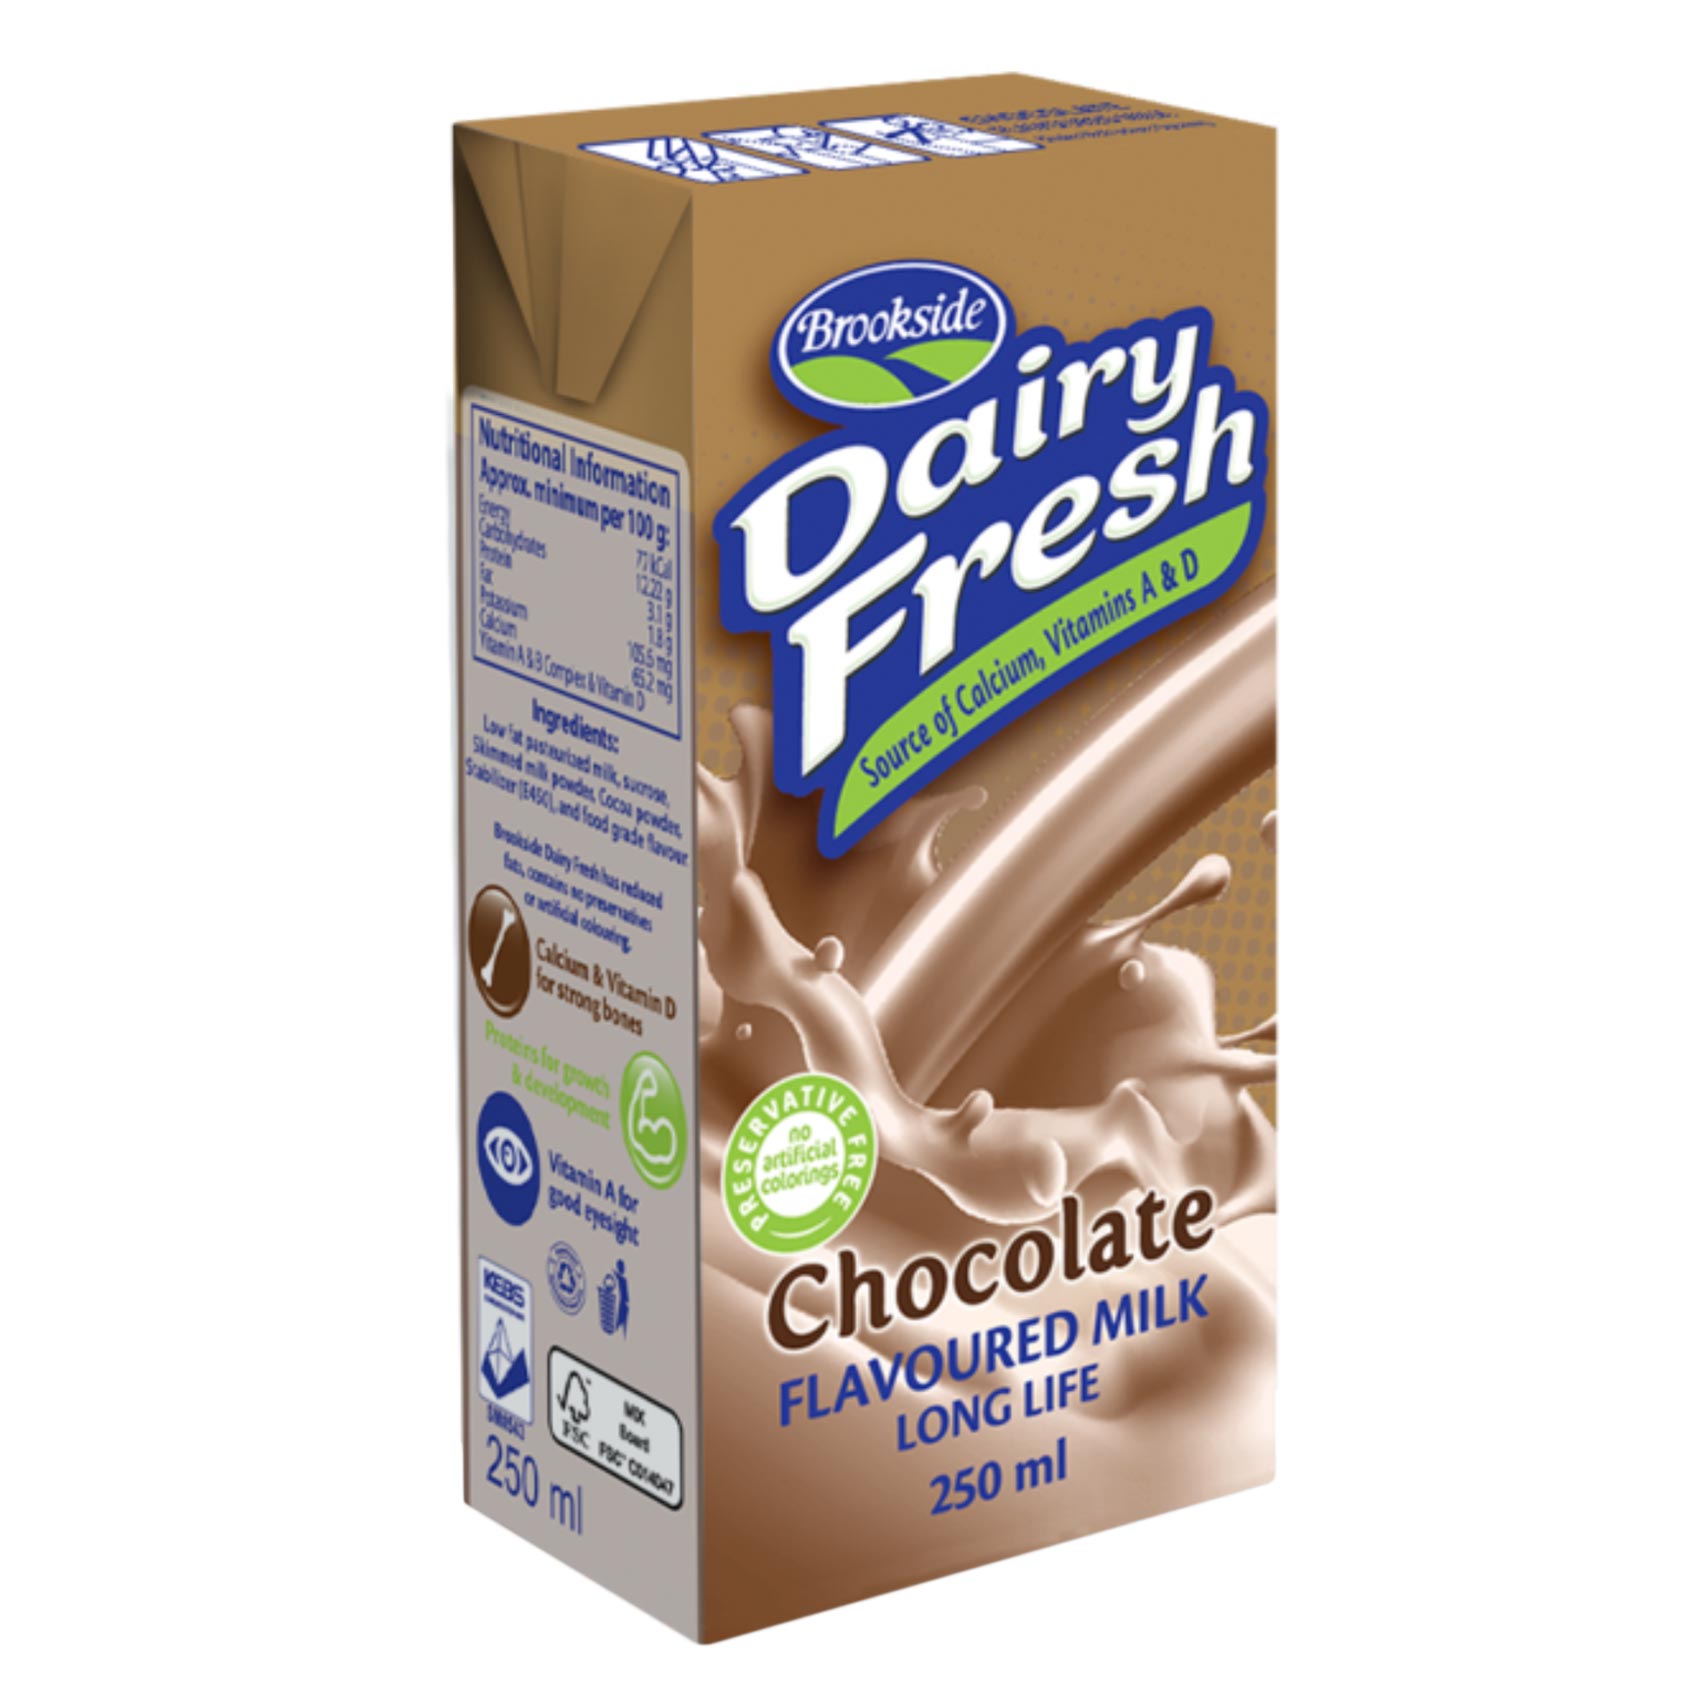 Brookside Dairy Fresh Chocolate Flavoured Milk 250ml - Long Life